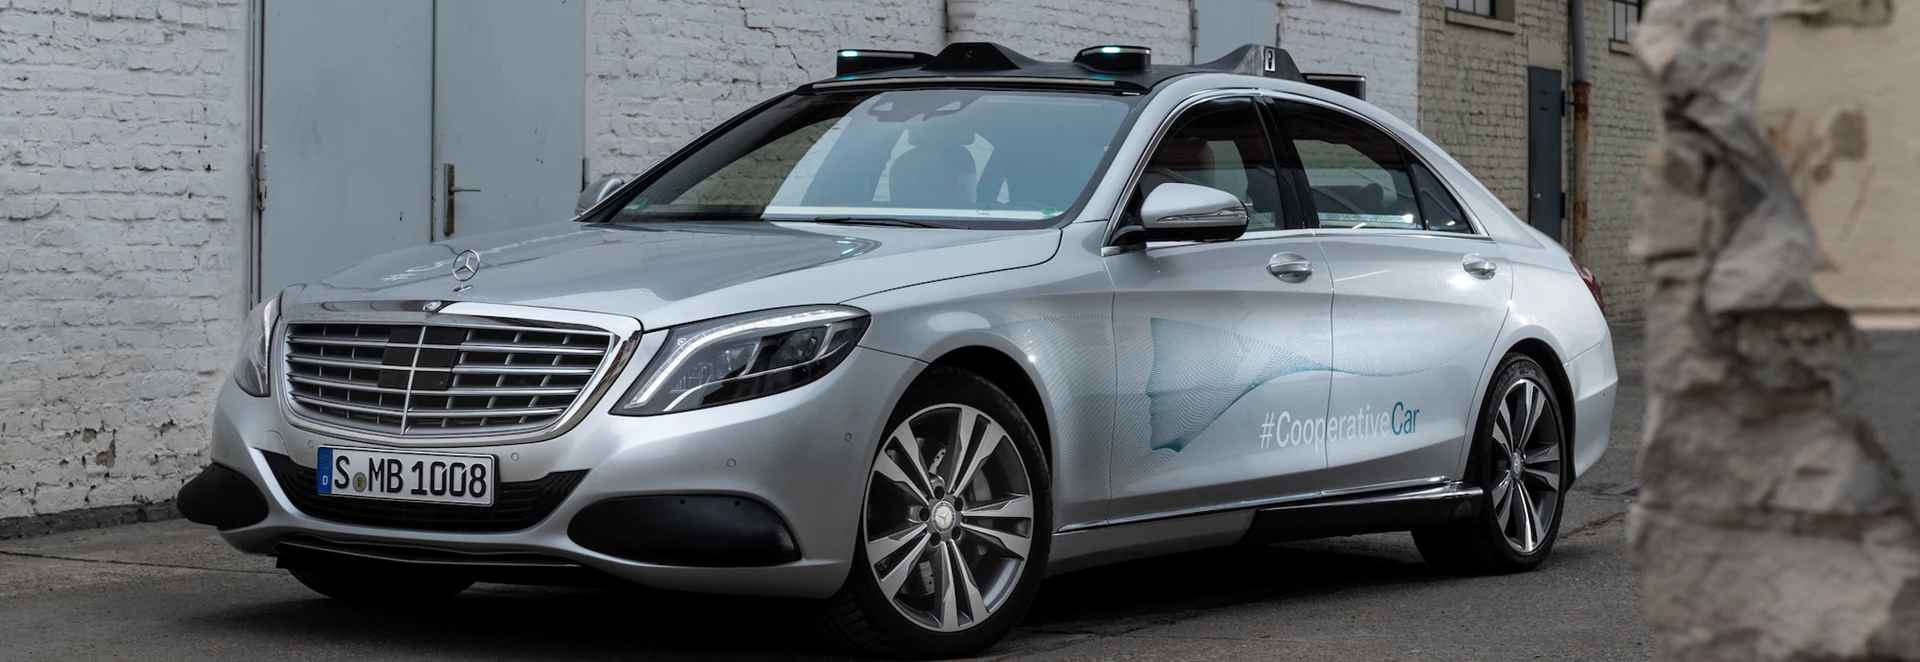 Mercedes unveils ‘cooperative vehicle’ development car